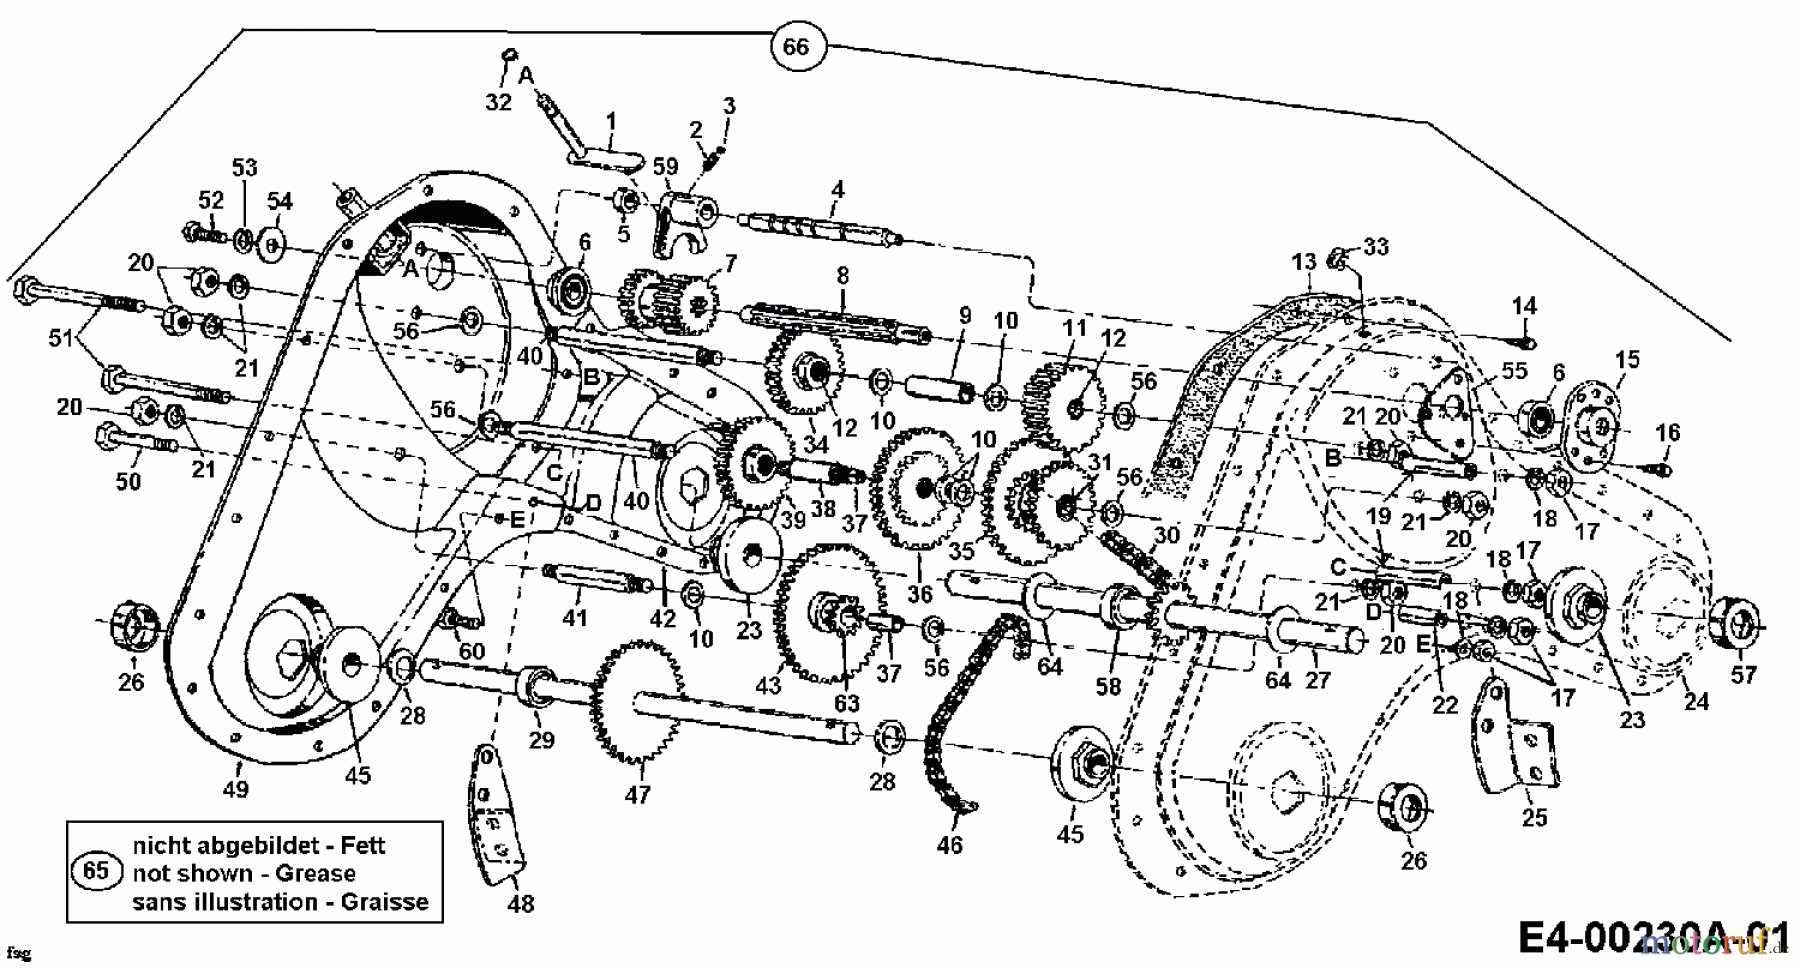  White Motorhacken RB 550 21A-447-679  (1998) Getriebe